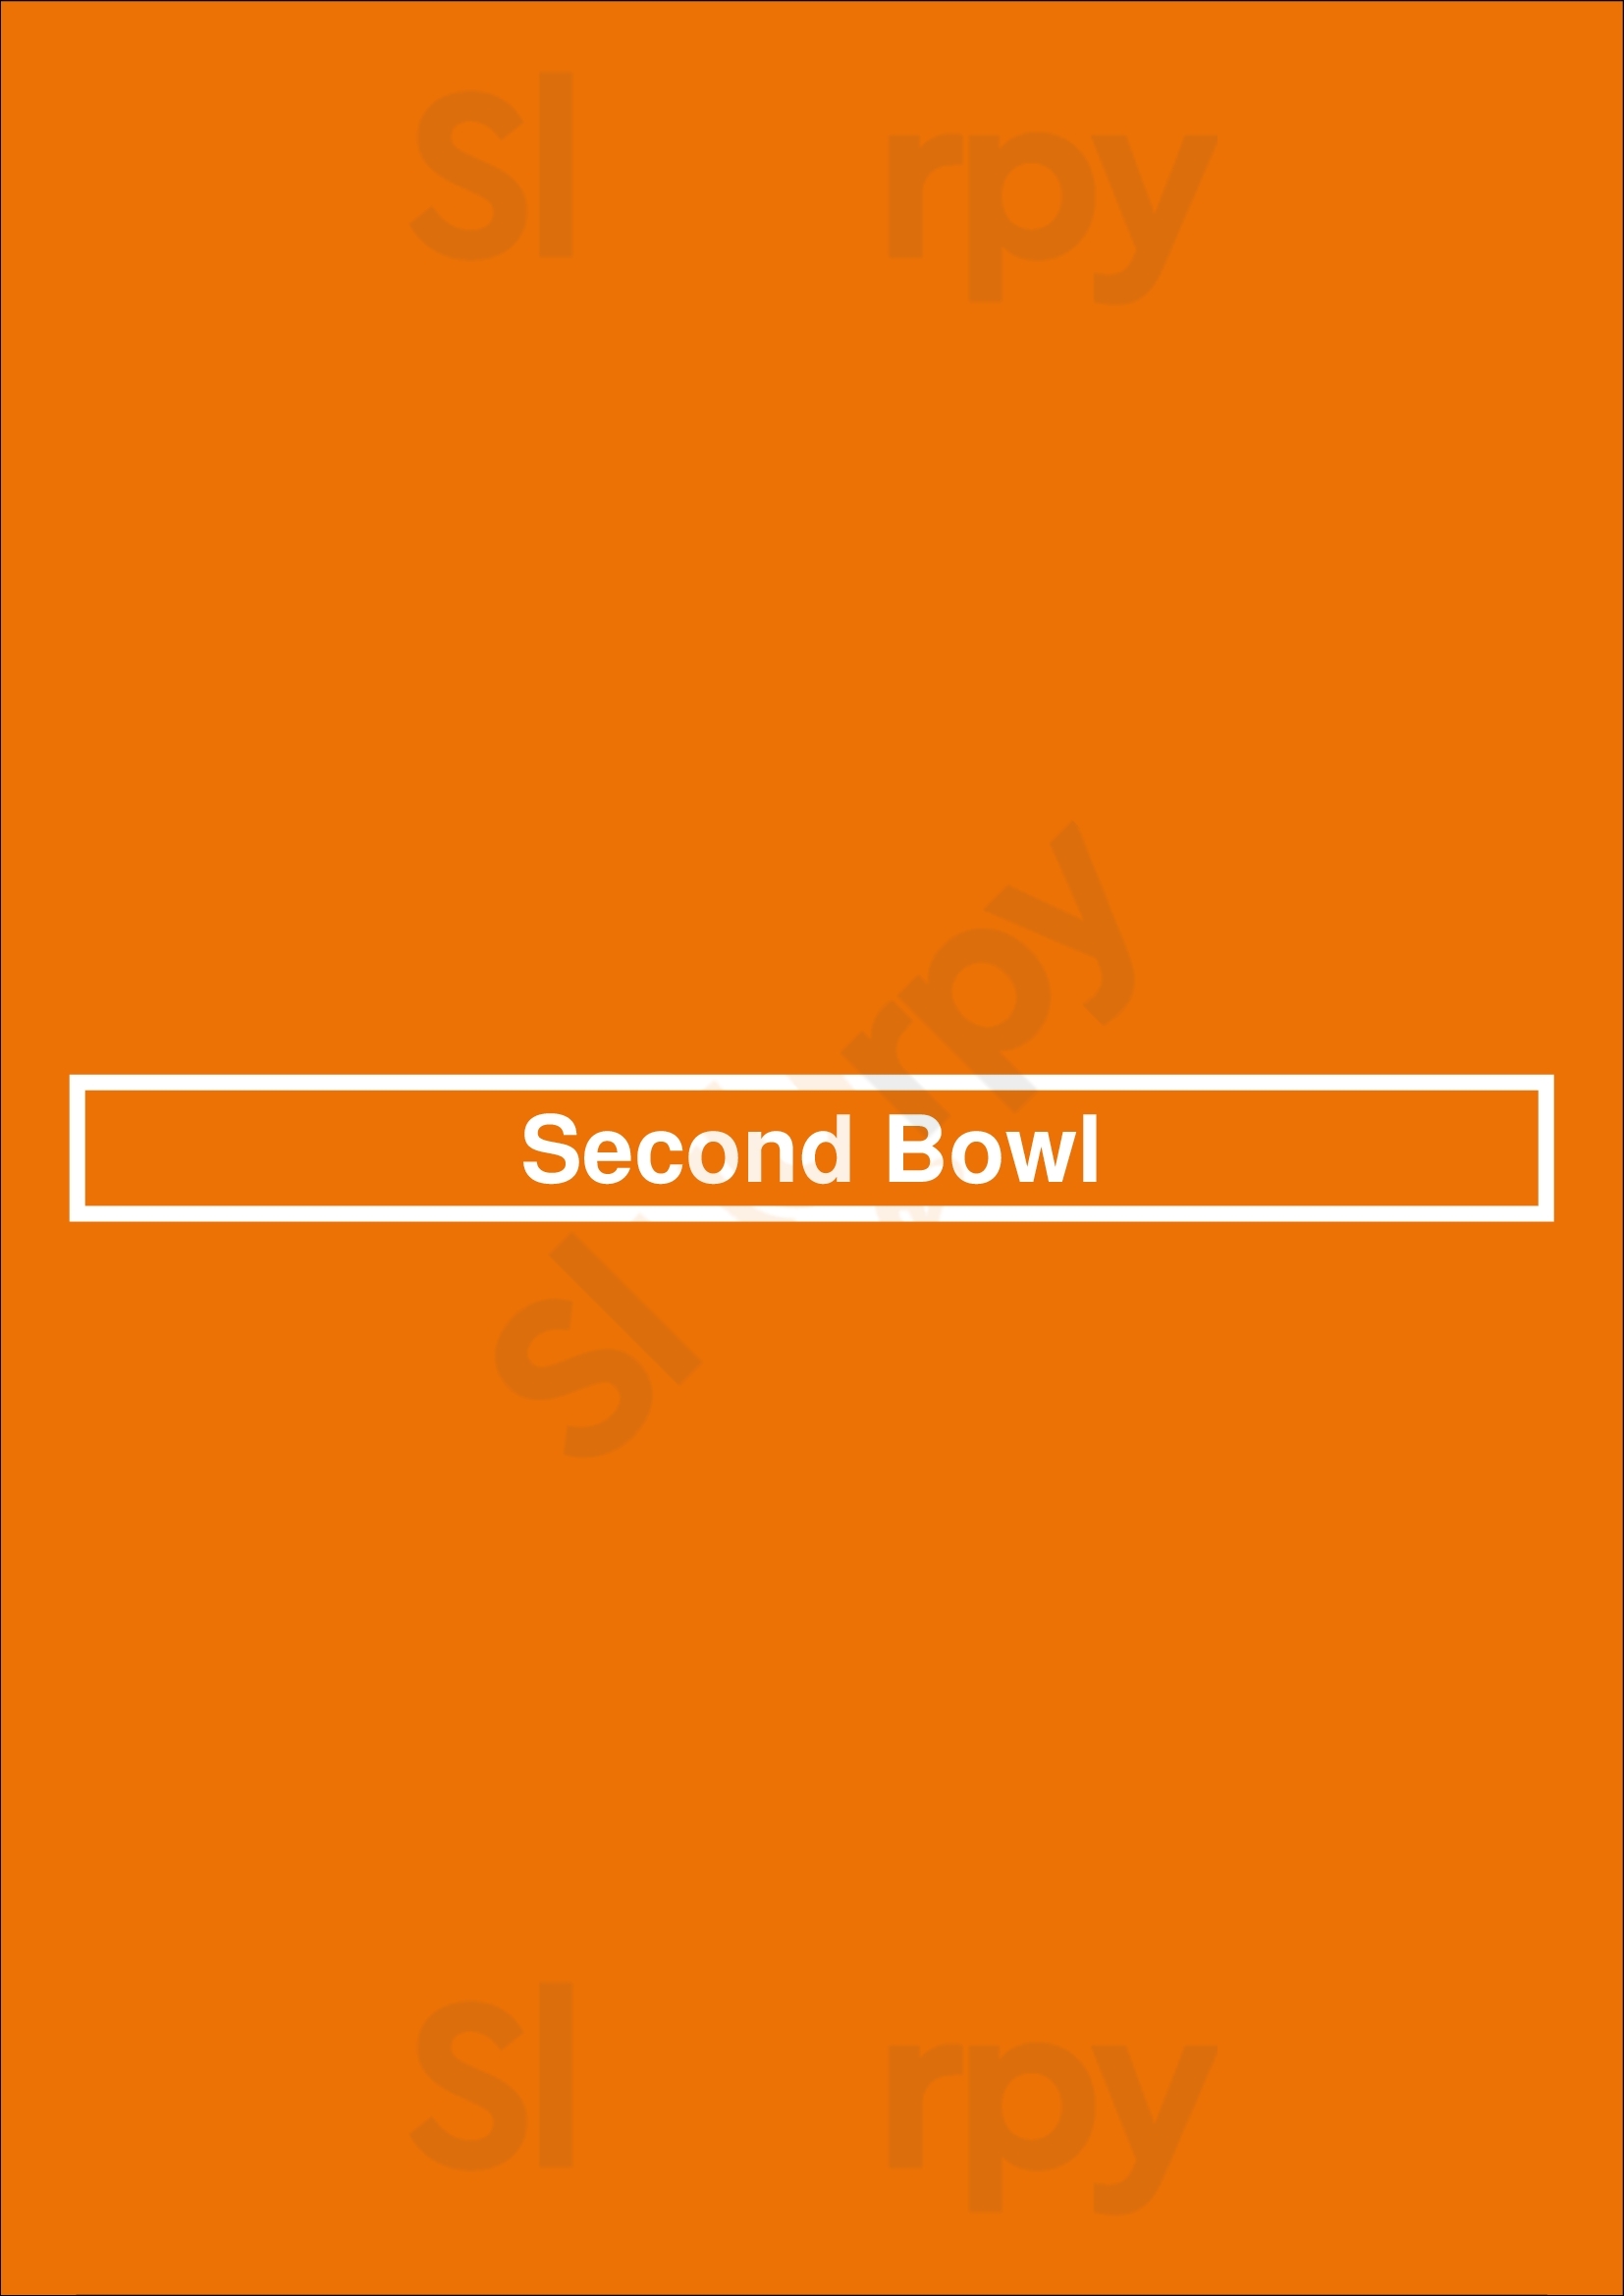 Second Bowl Newmarket Menu - 1